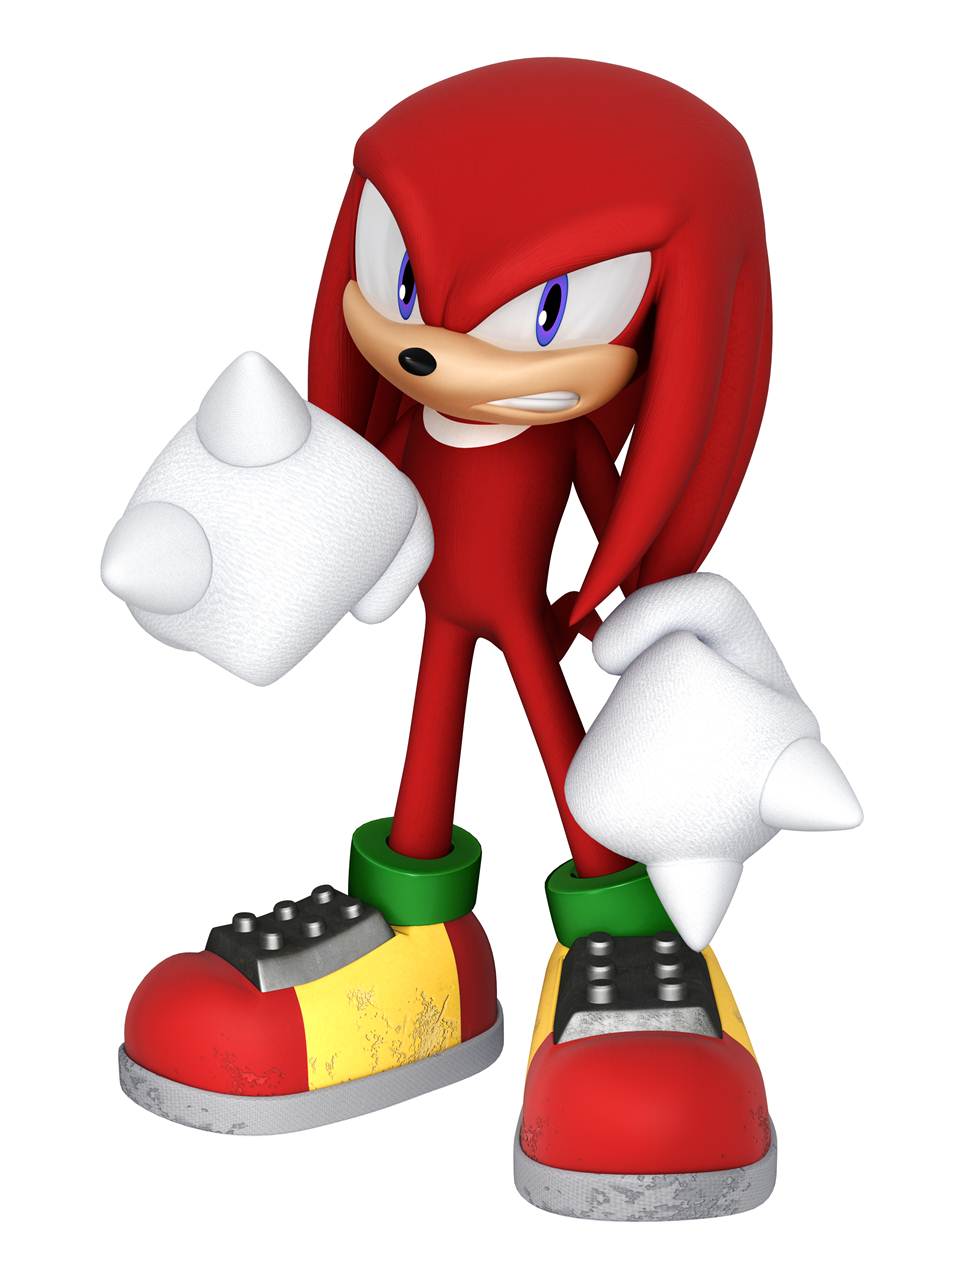 Sonic & Sega All-Stars Racing - Wikipedia